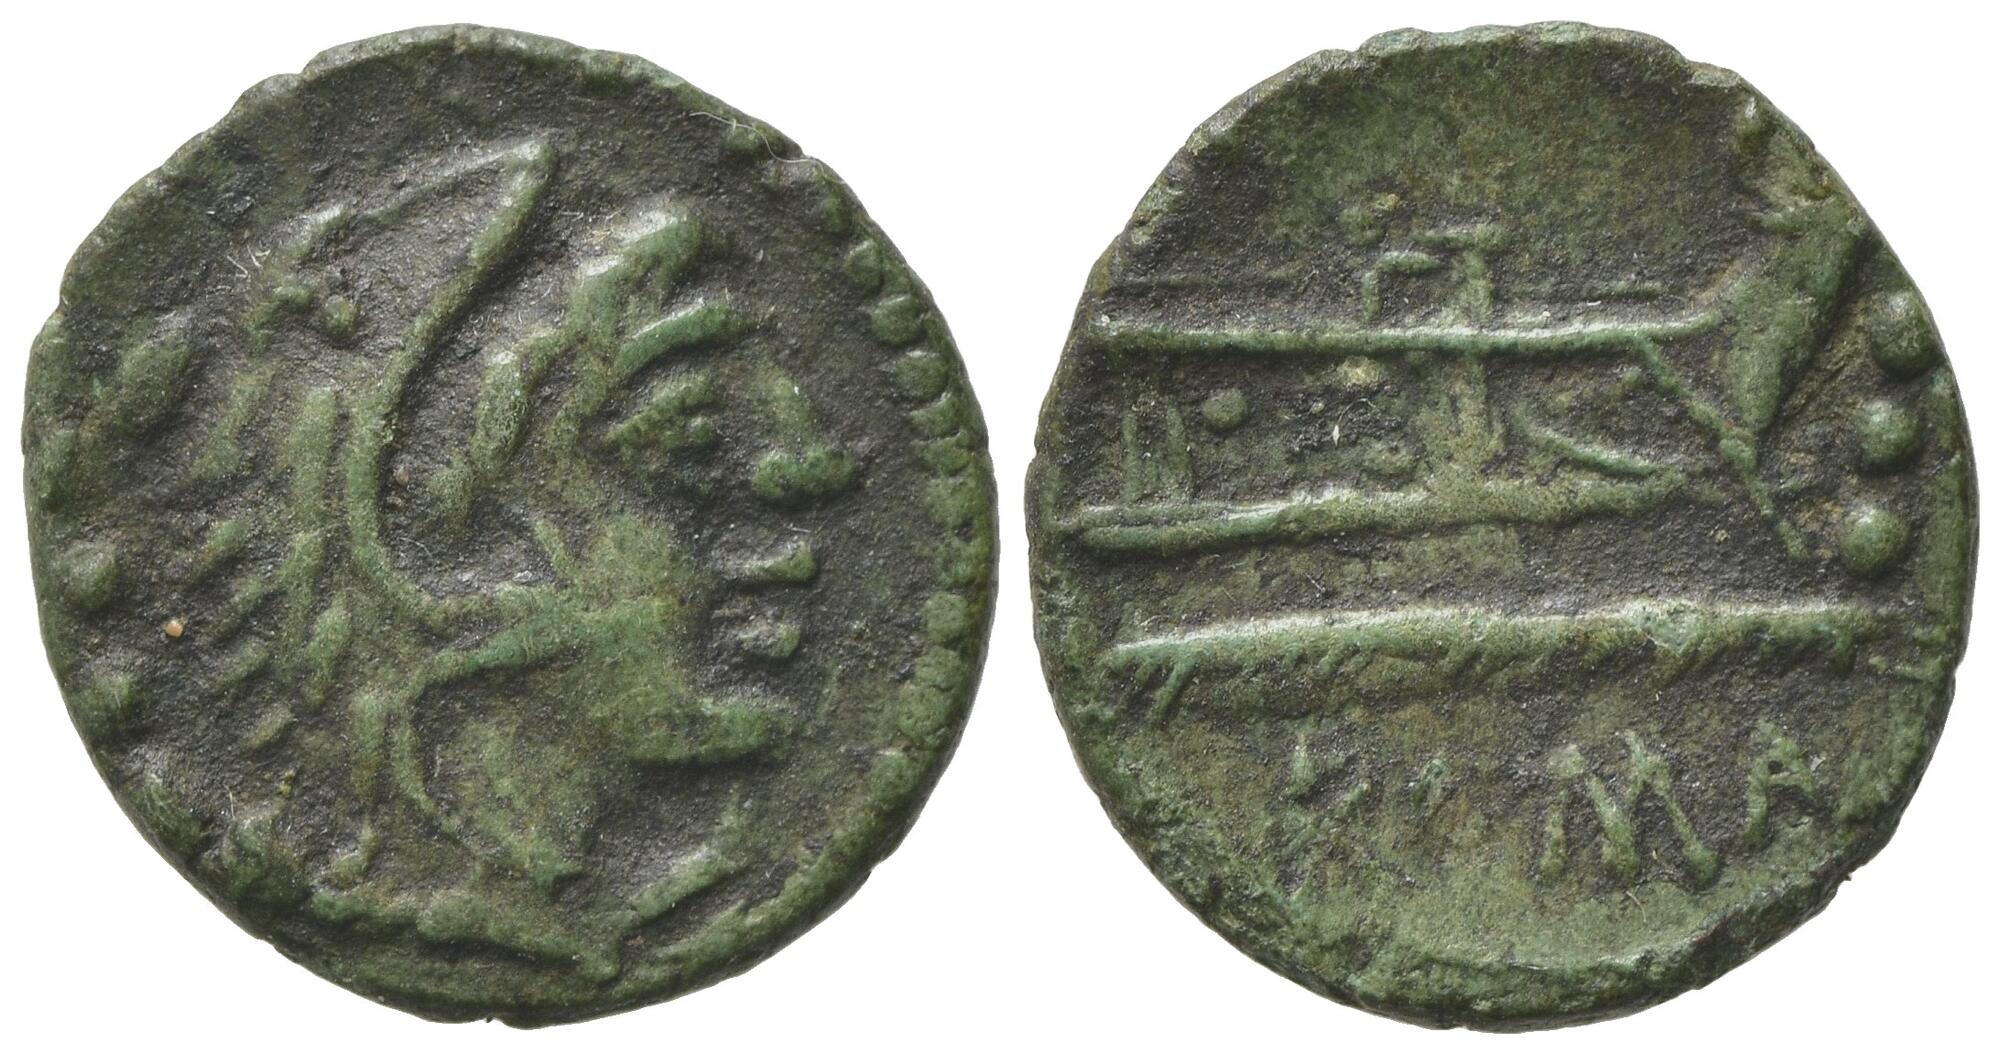 25 METRI INS 1:12th SCALA REALE Gallese verde pietra in miniatura LASTRICO 